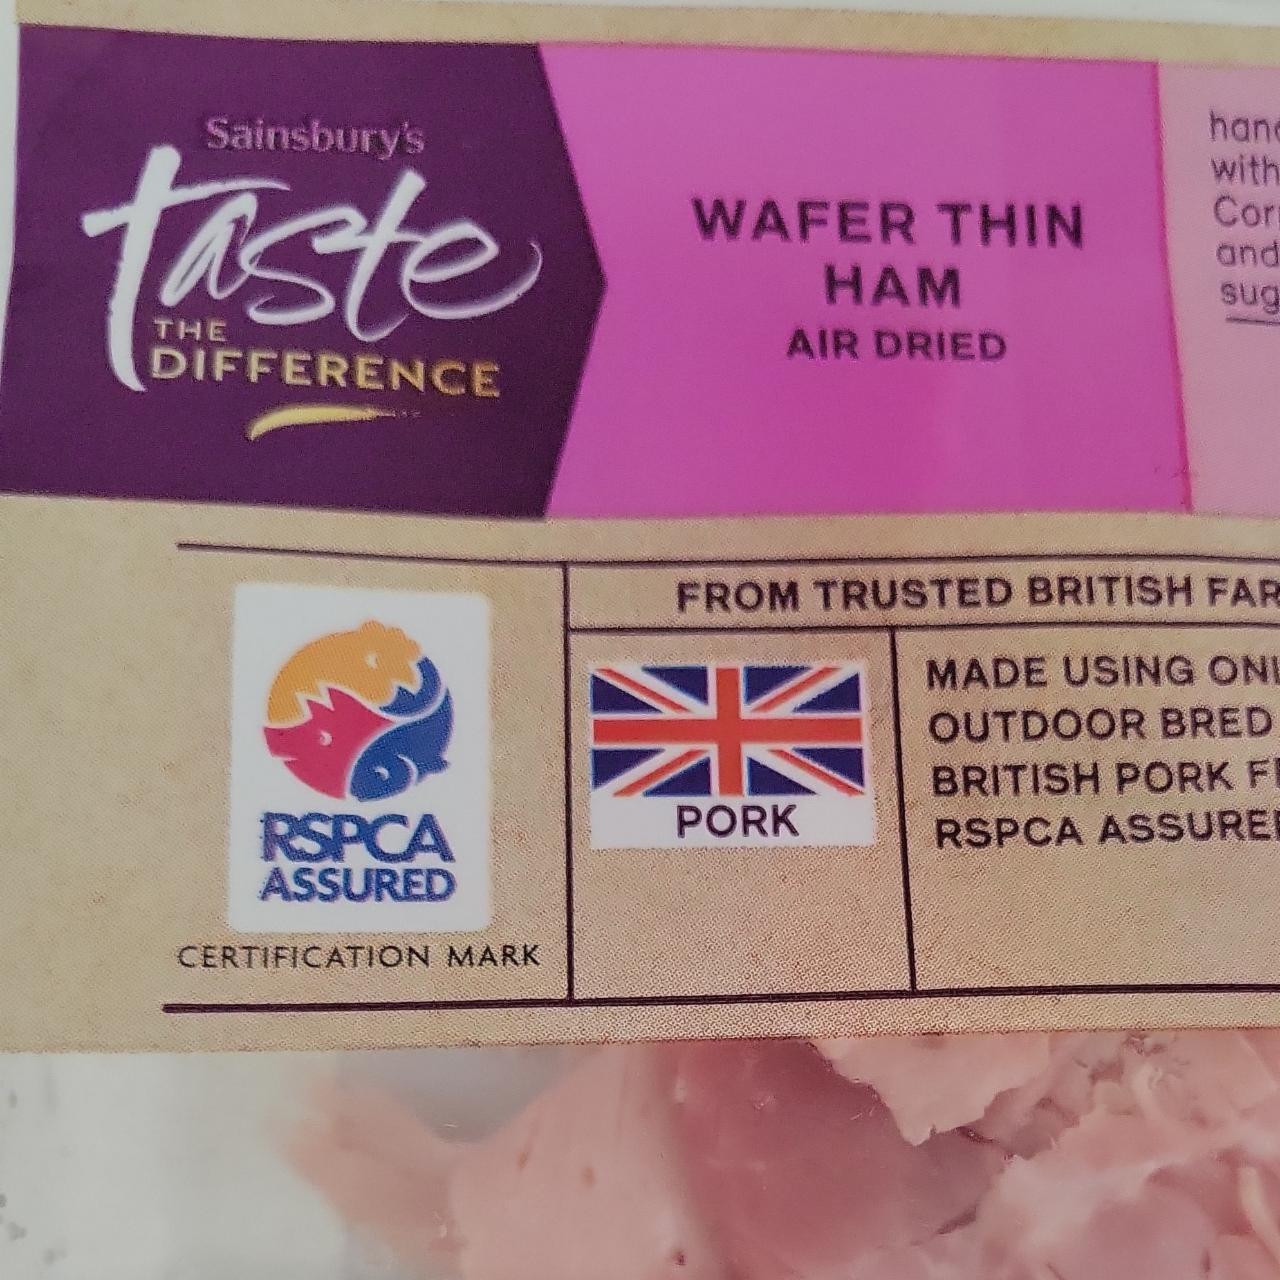 Fotografie - Wafer thin ham air dried Sainsbury's